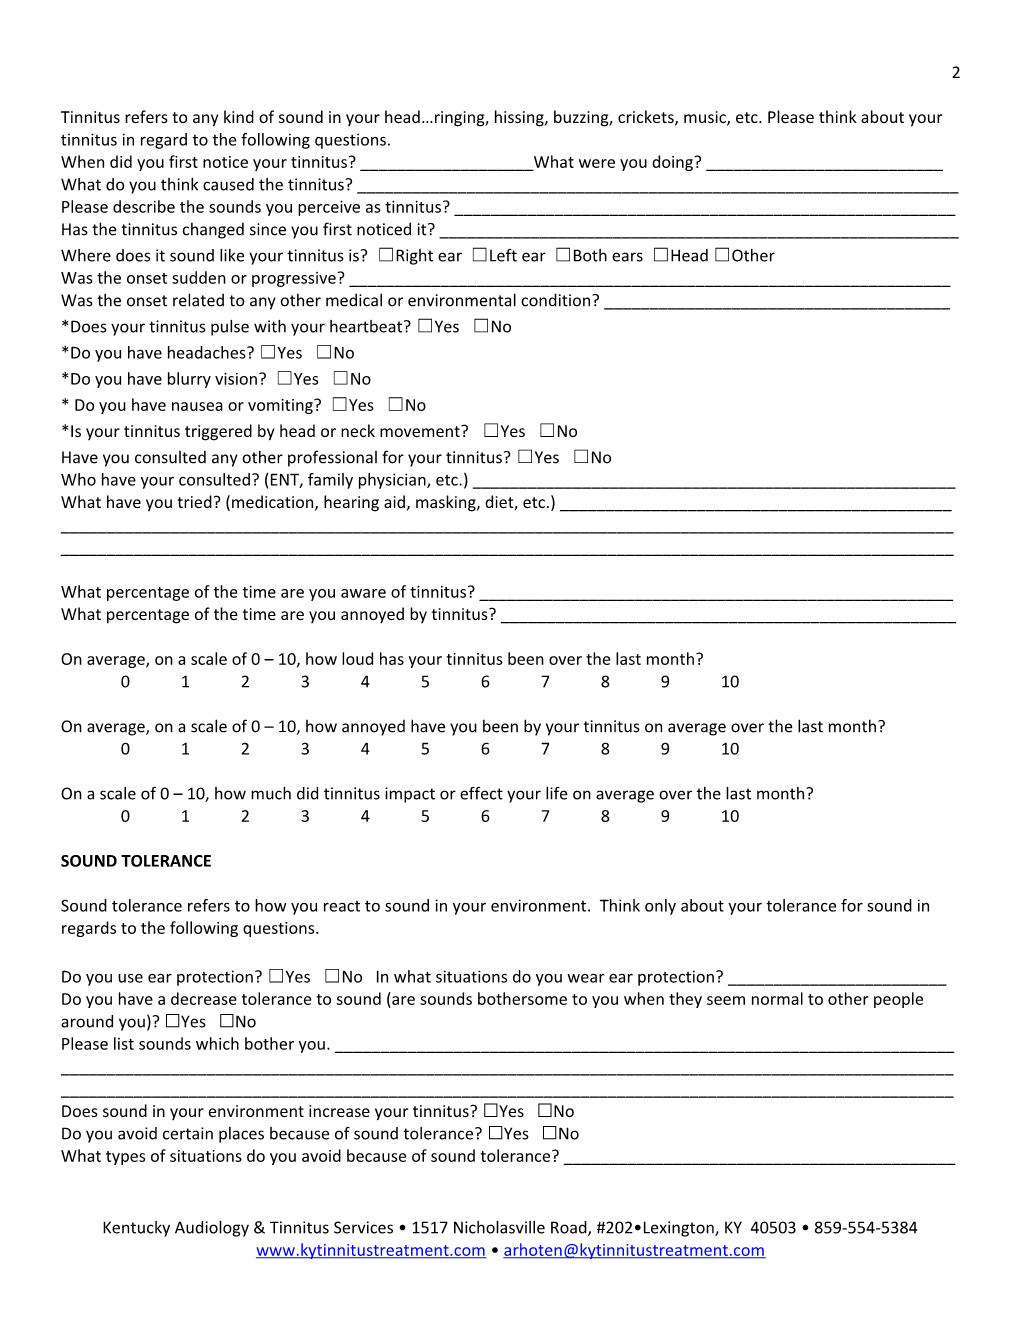 Initial Tinnitus Questionnaire